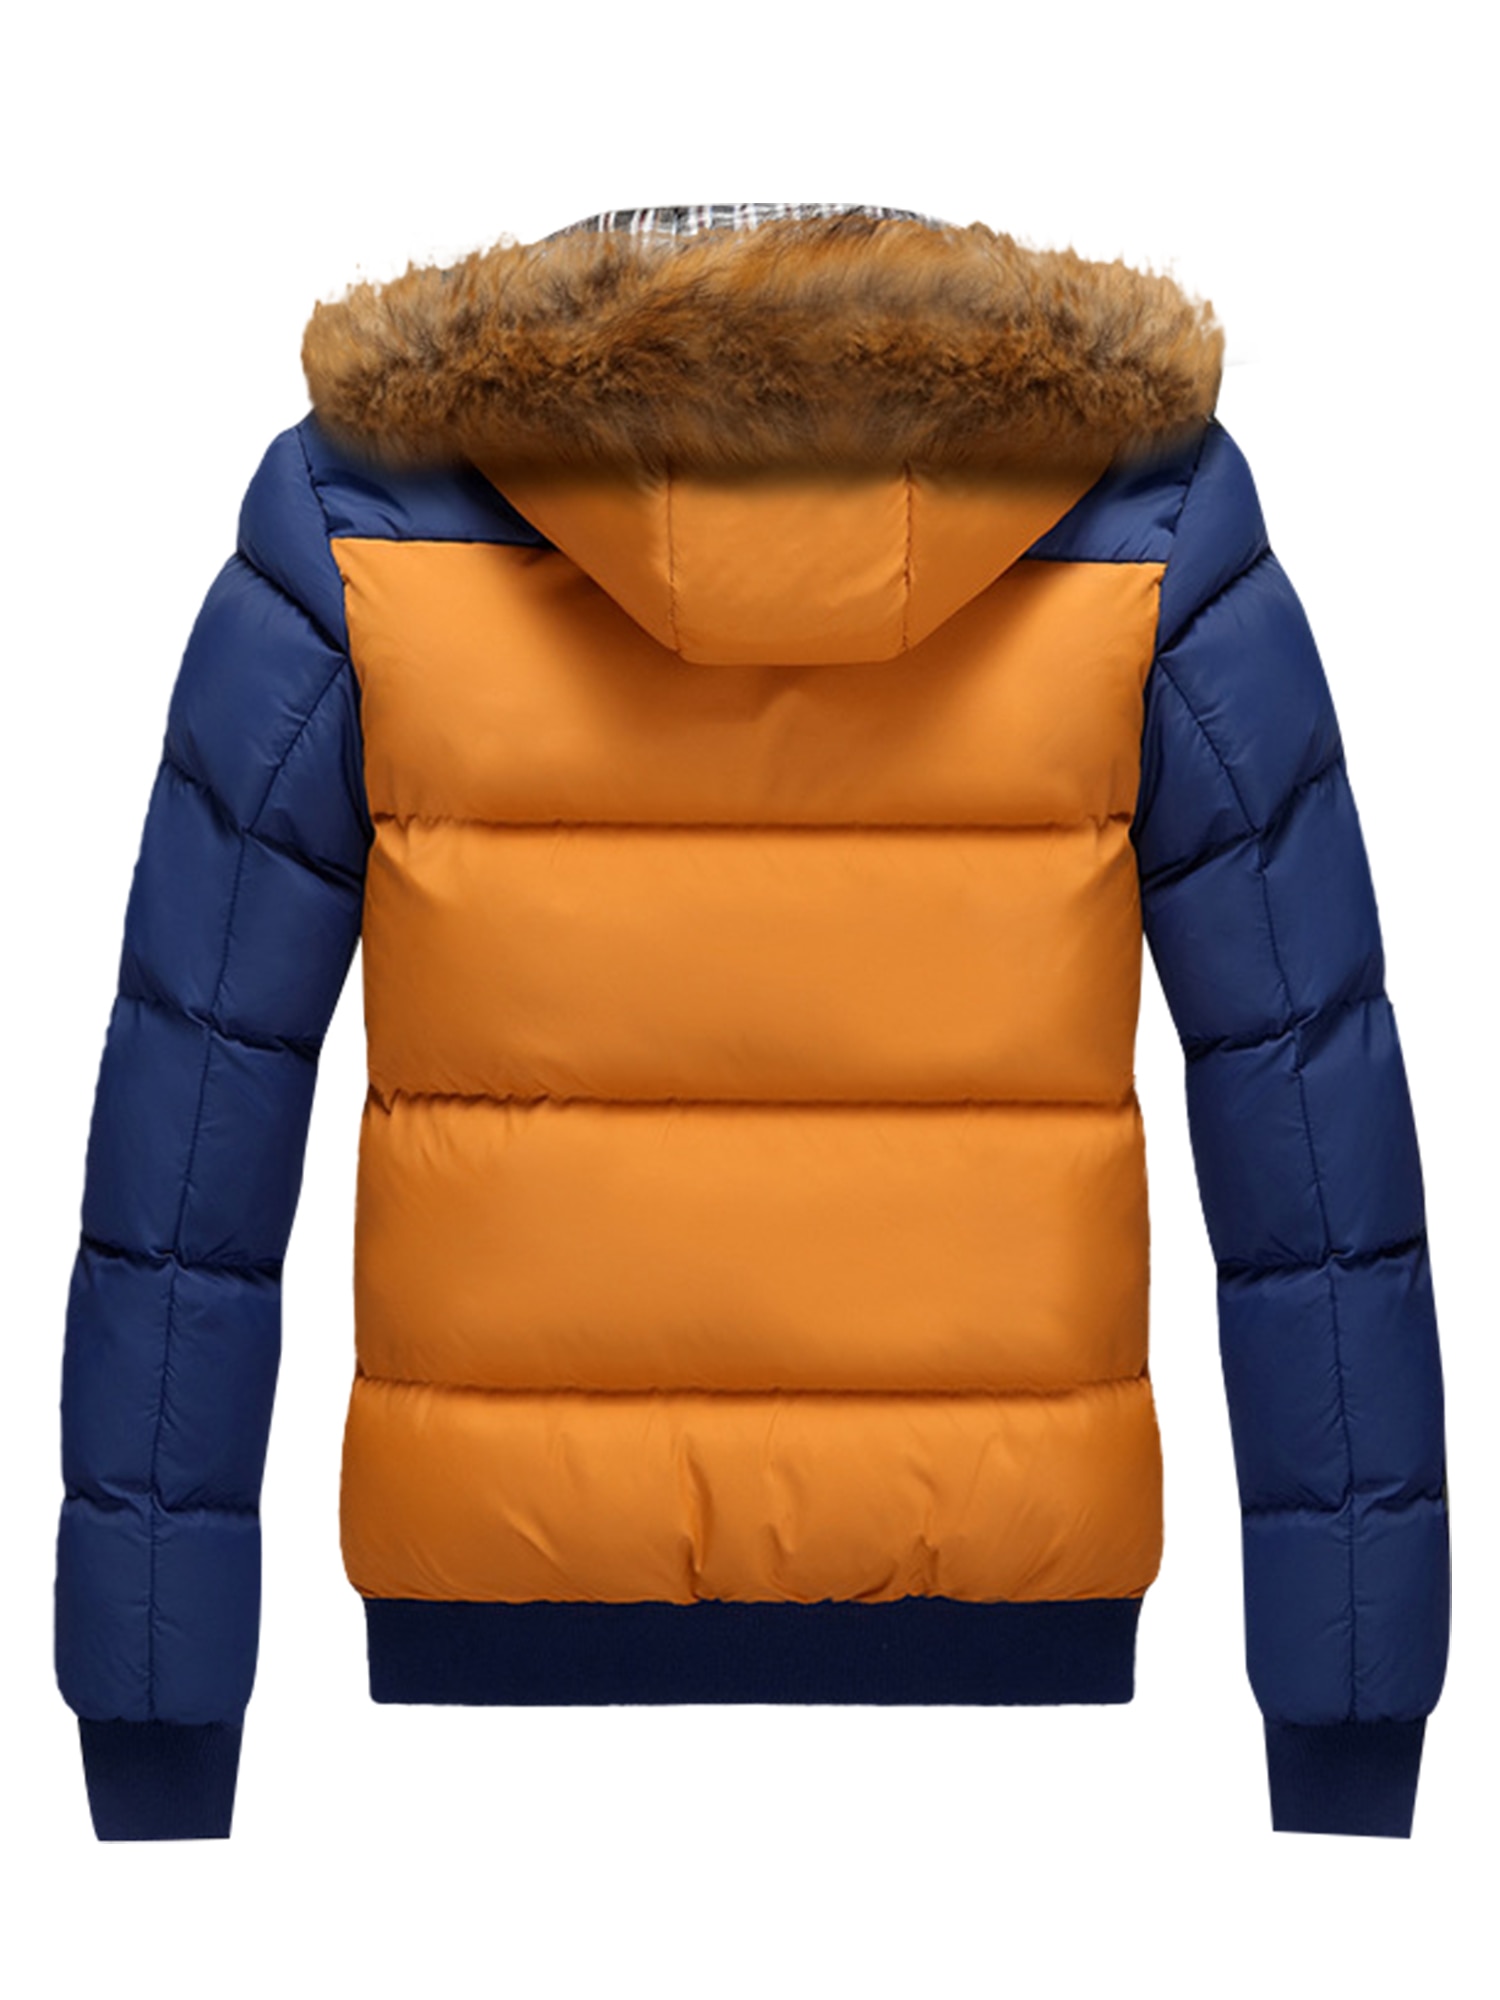 Plus Size Men Winter Warm Zipper Big Collar Hooded Coat Jacket Contrast Color Long Sleeve Hoody Hooded Parka Jacket Outwear - image 3 of 3